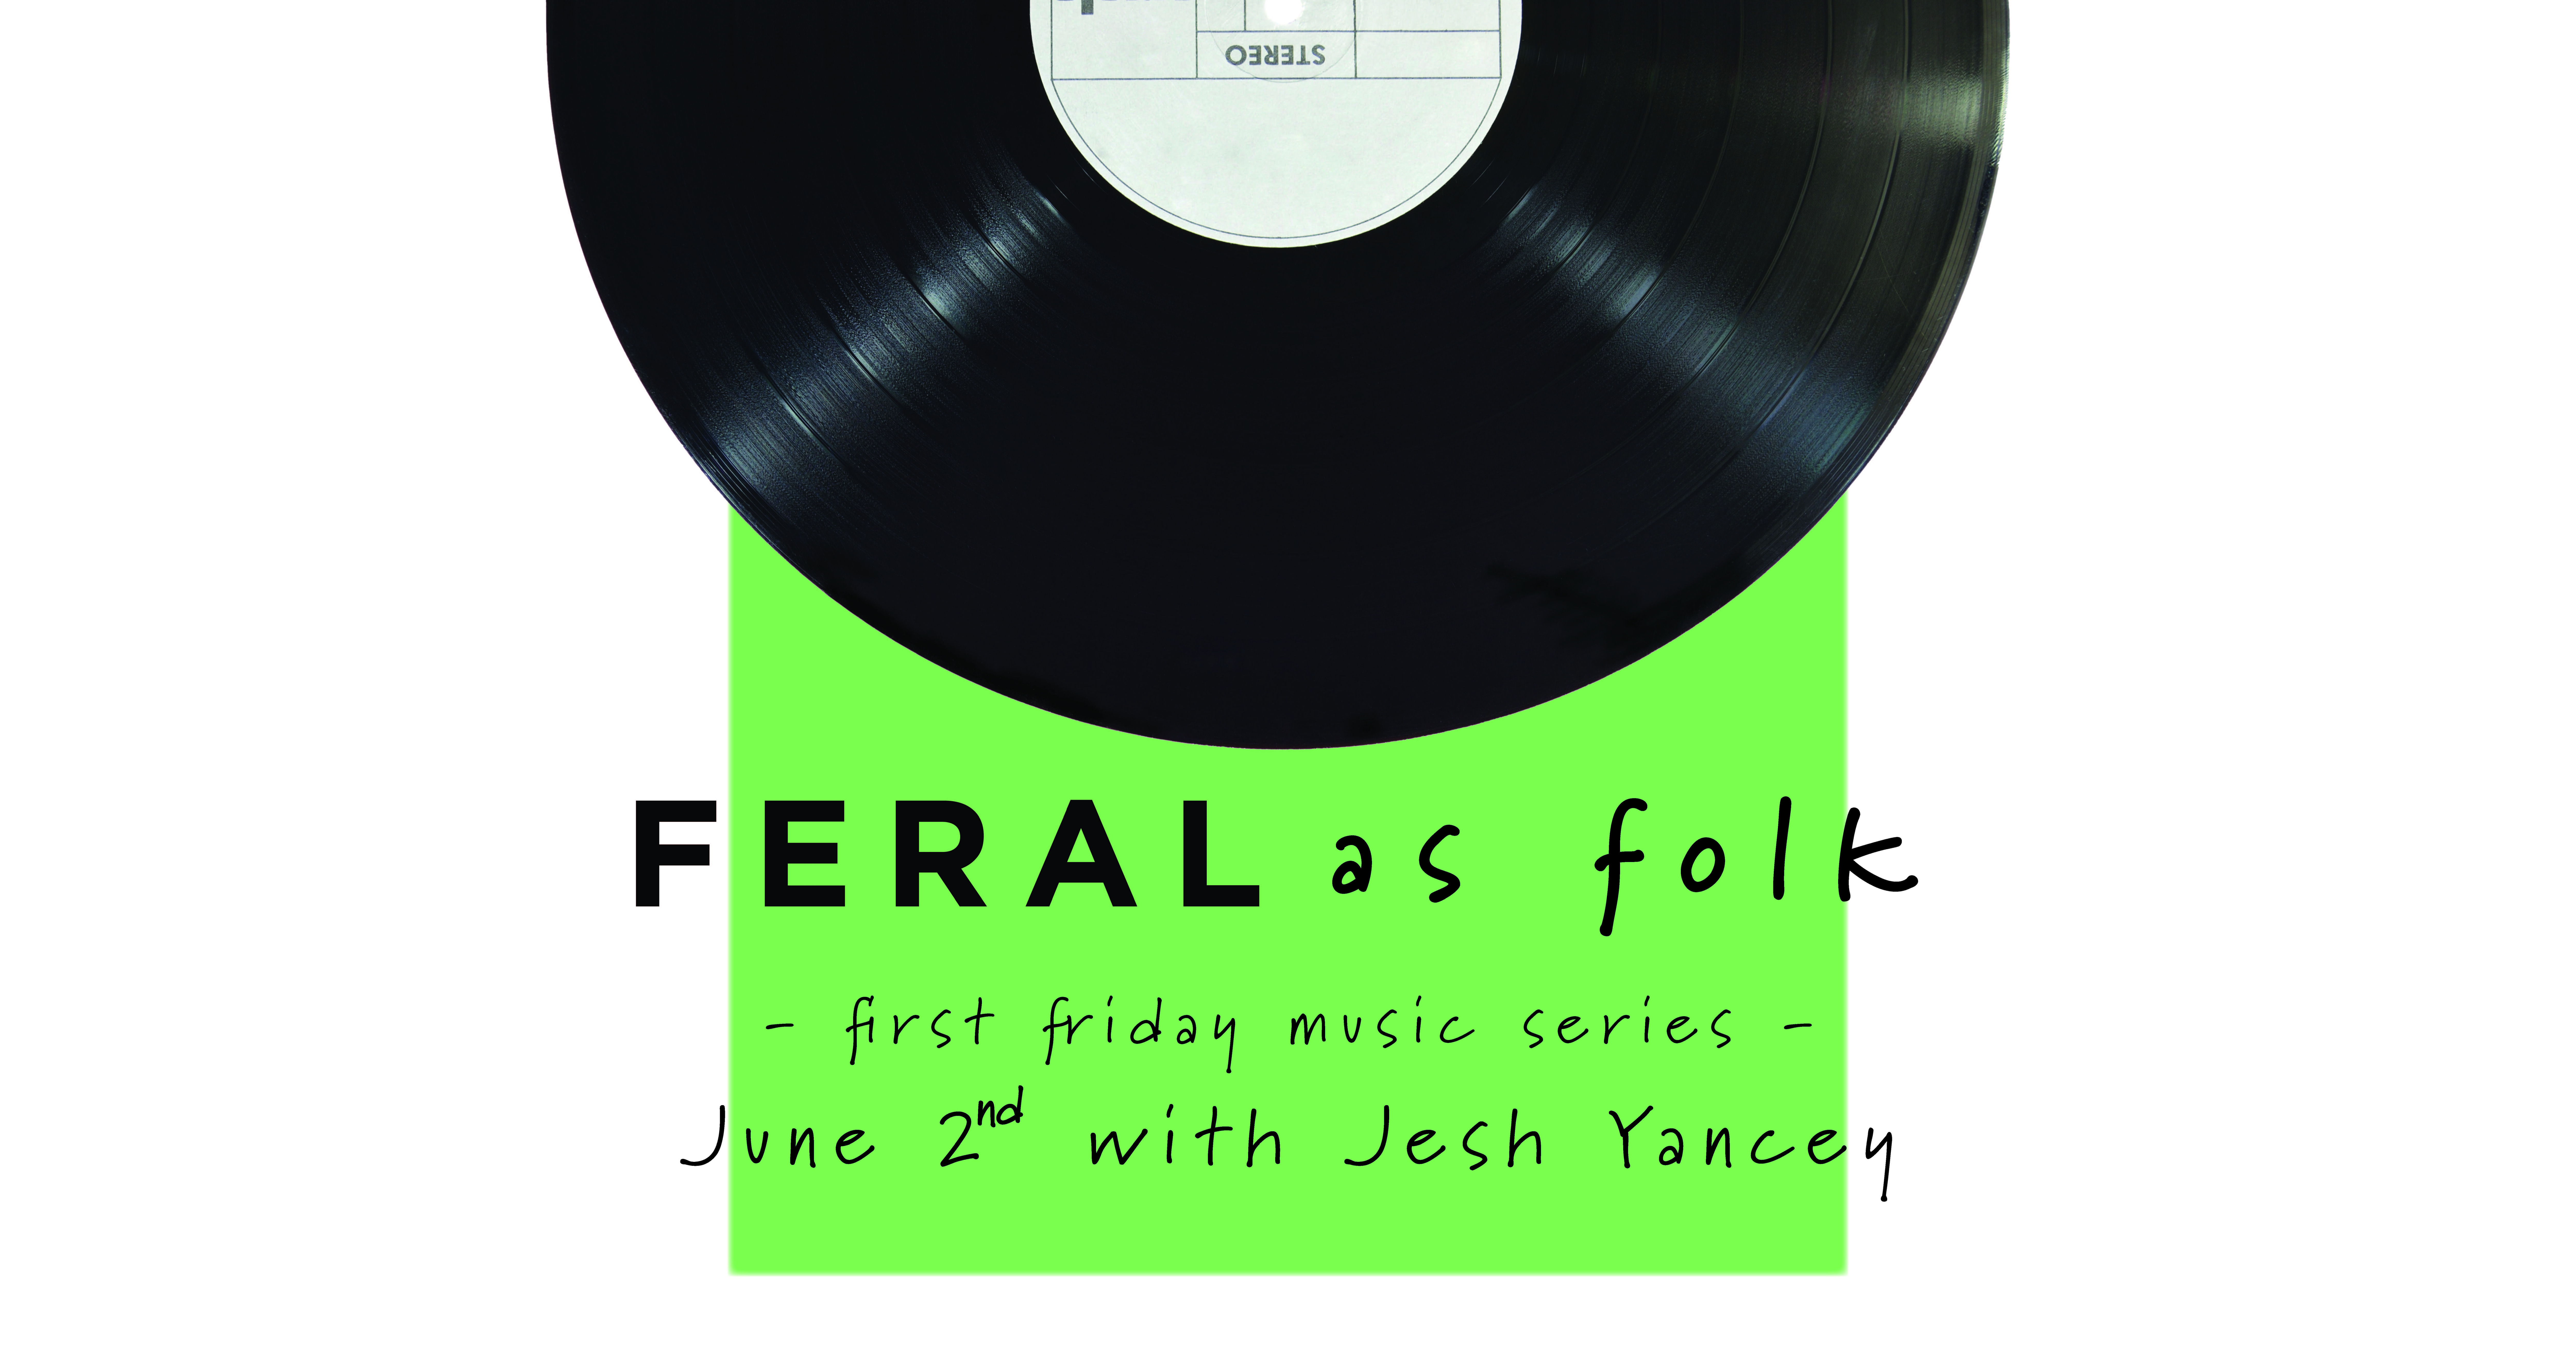 FERAL as Folk Friday Music Series With Jesh Yancey